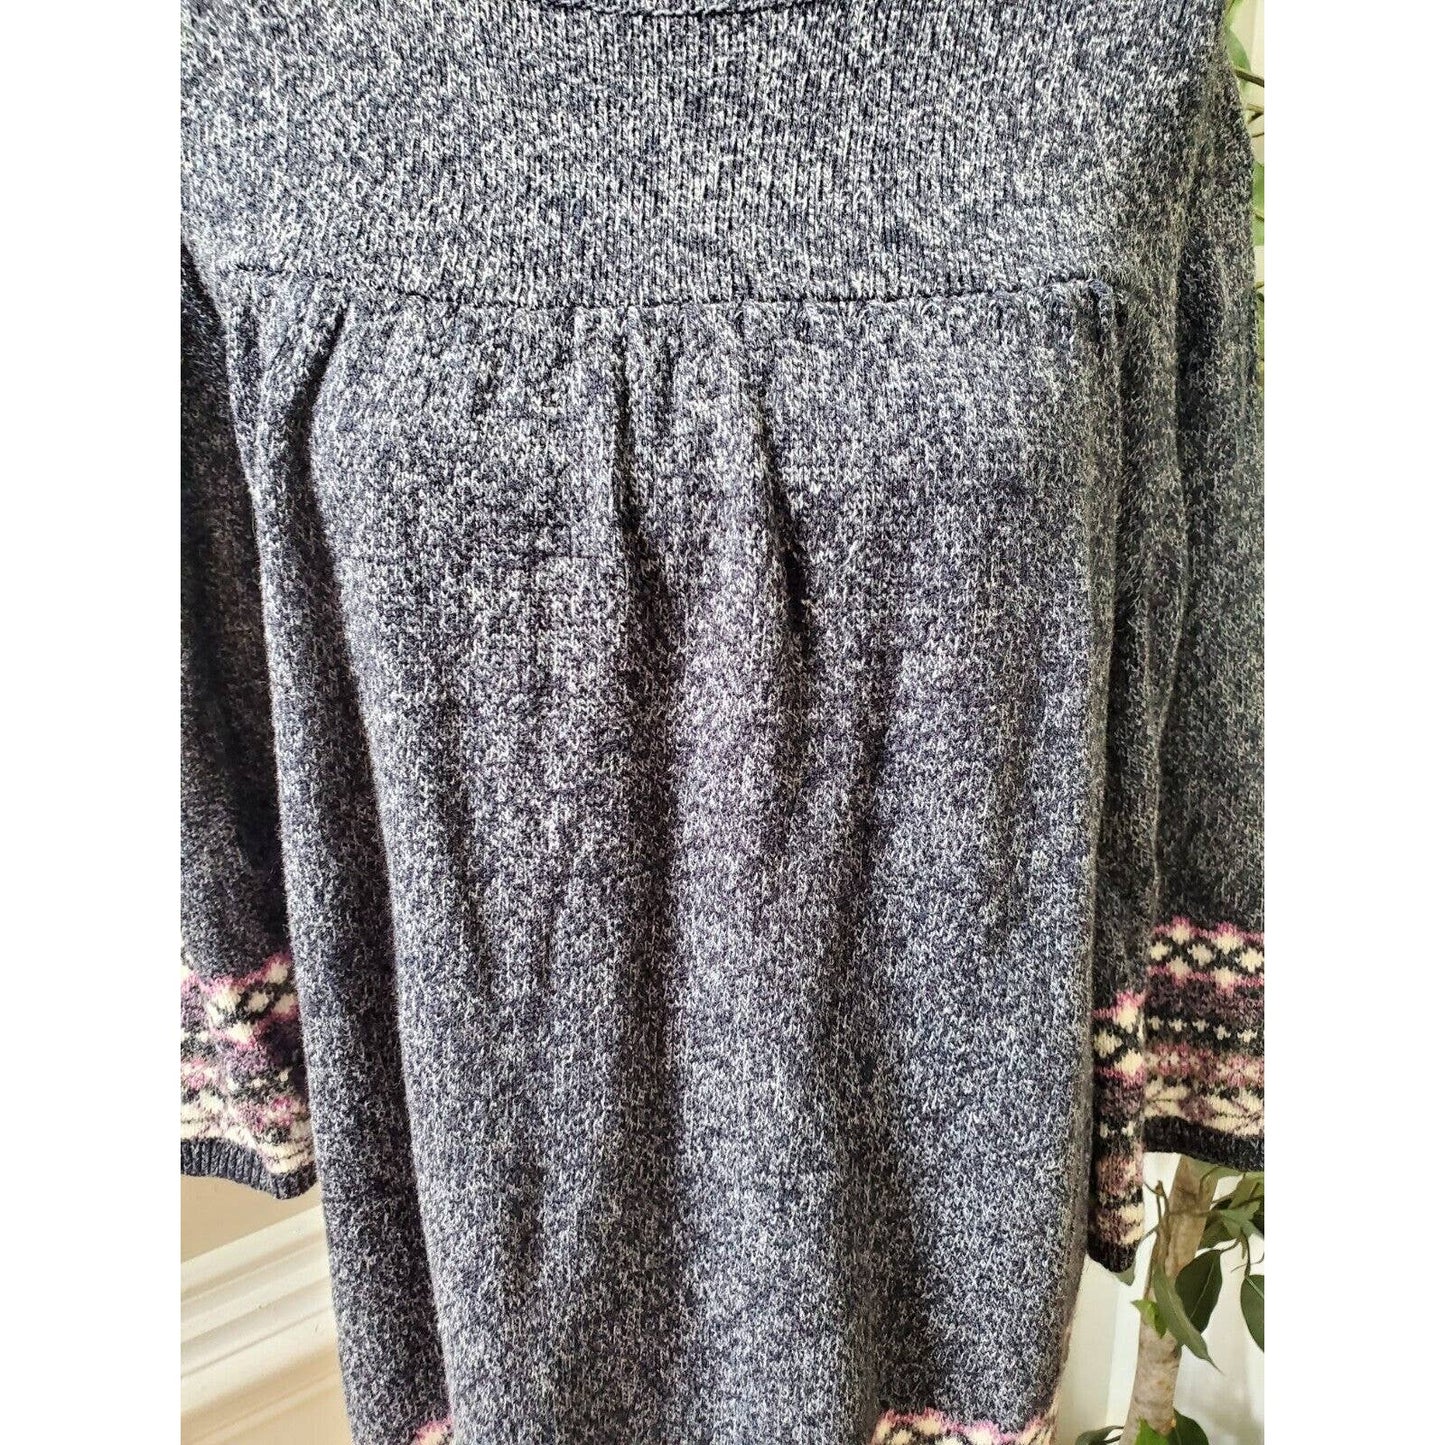 Dressbarn Women Gray Acrylic Turtle Neck Long Sleeve Pullover Sweater Size 18/20